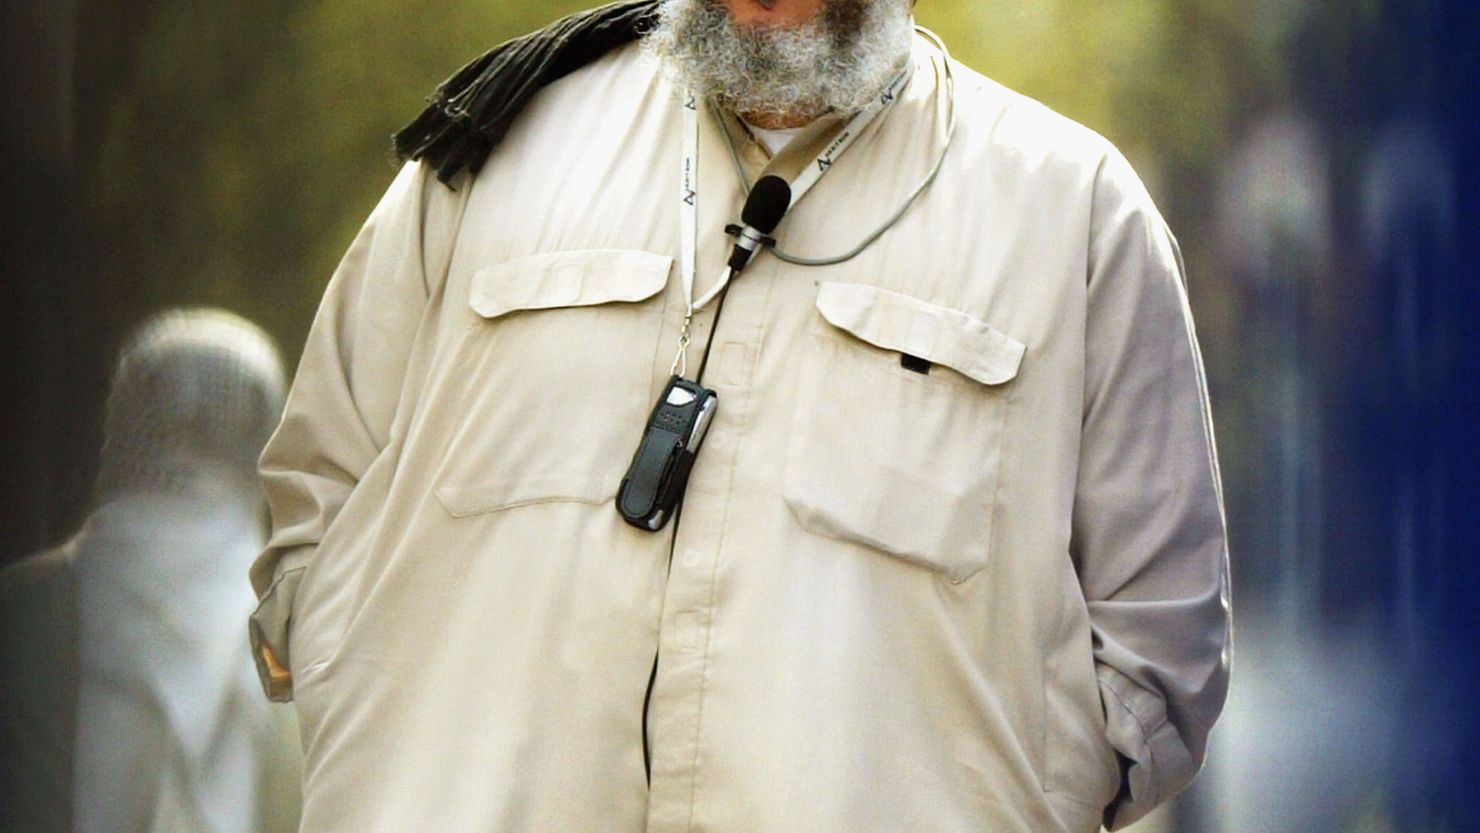 Lawyers for radical Islamist cleric Abu Hamza al-Masri have said his mental health is failing.